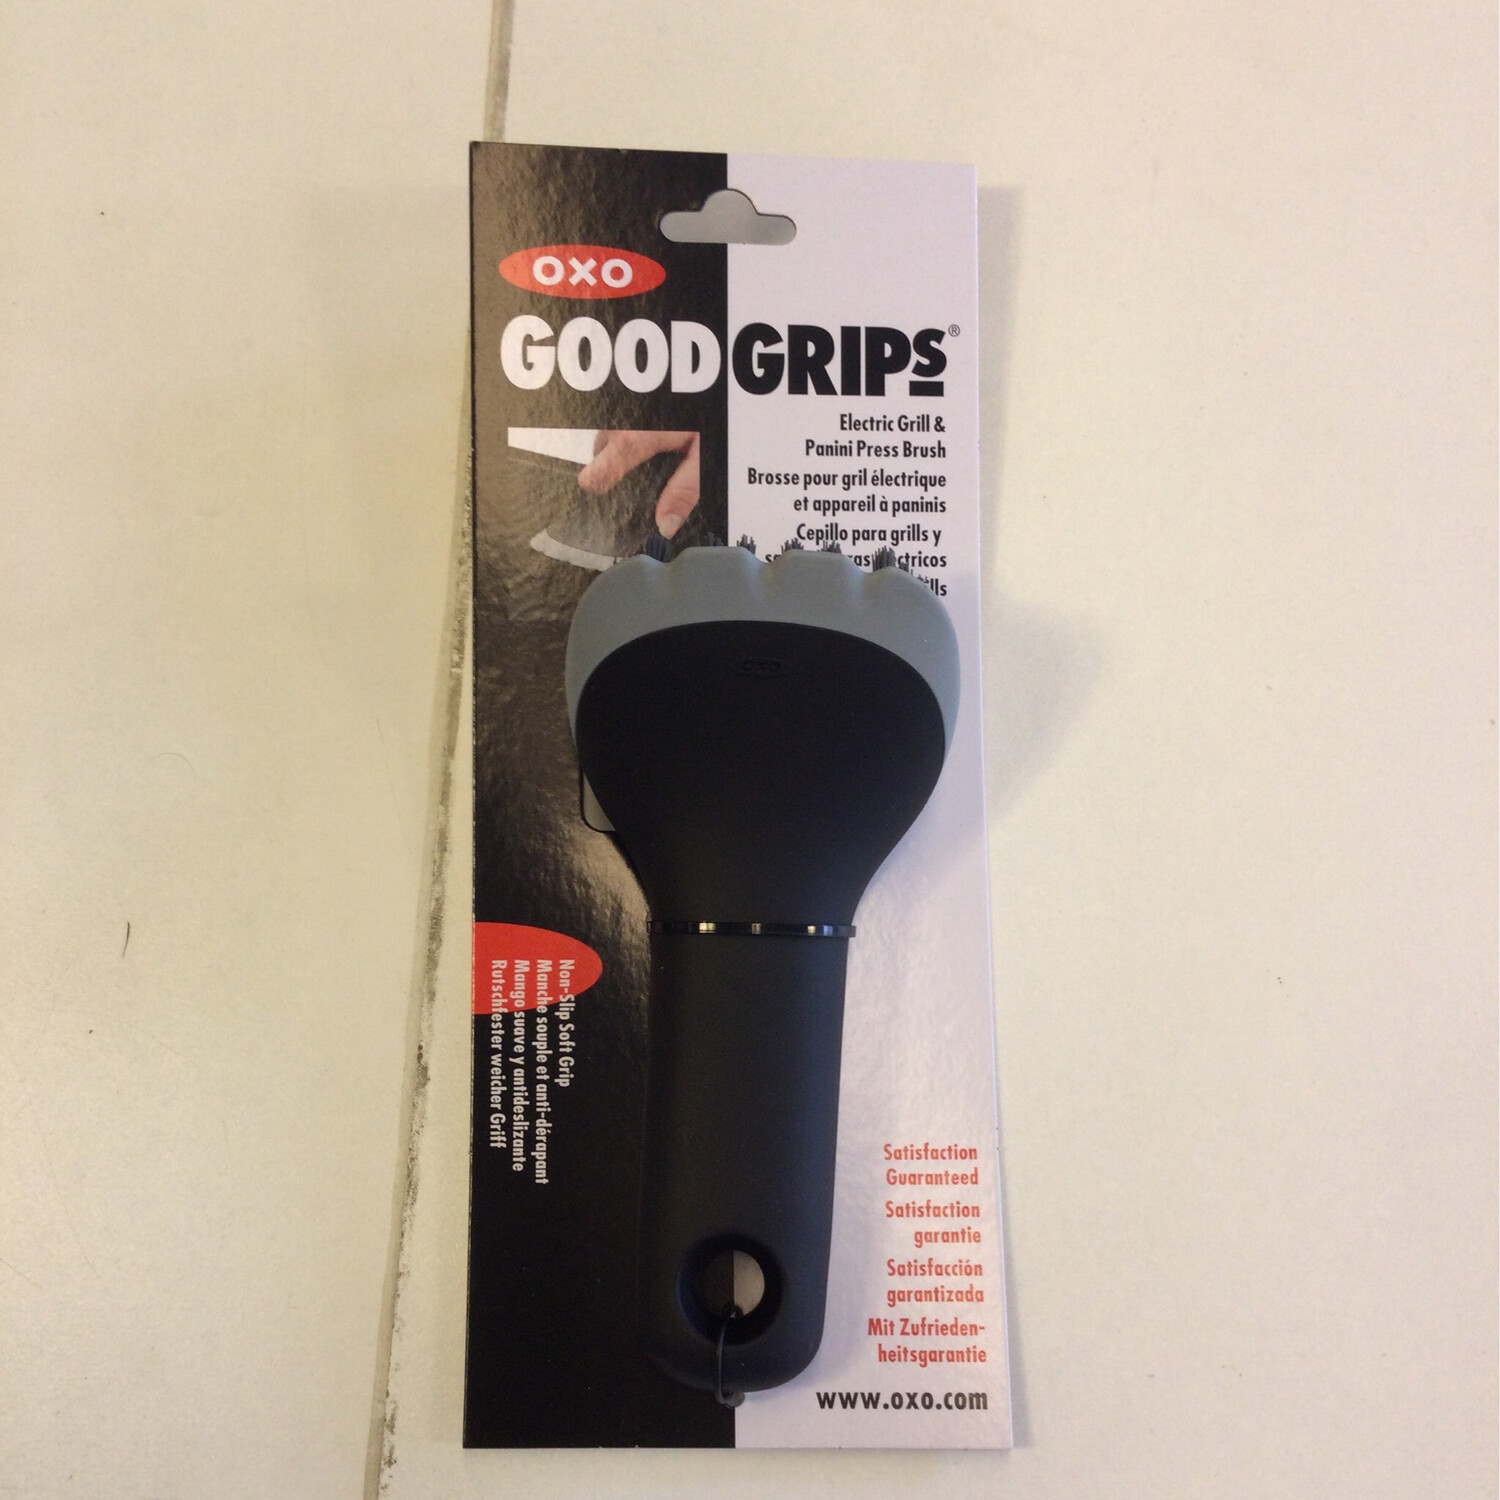 OXO Good Grips Electric Grill & Panini Press Brush